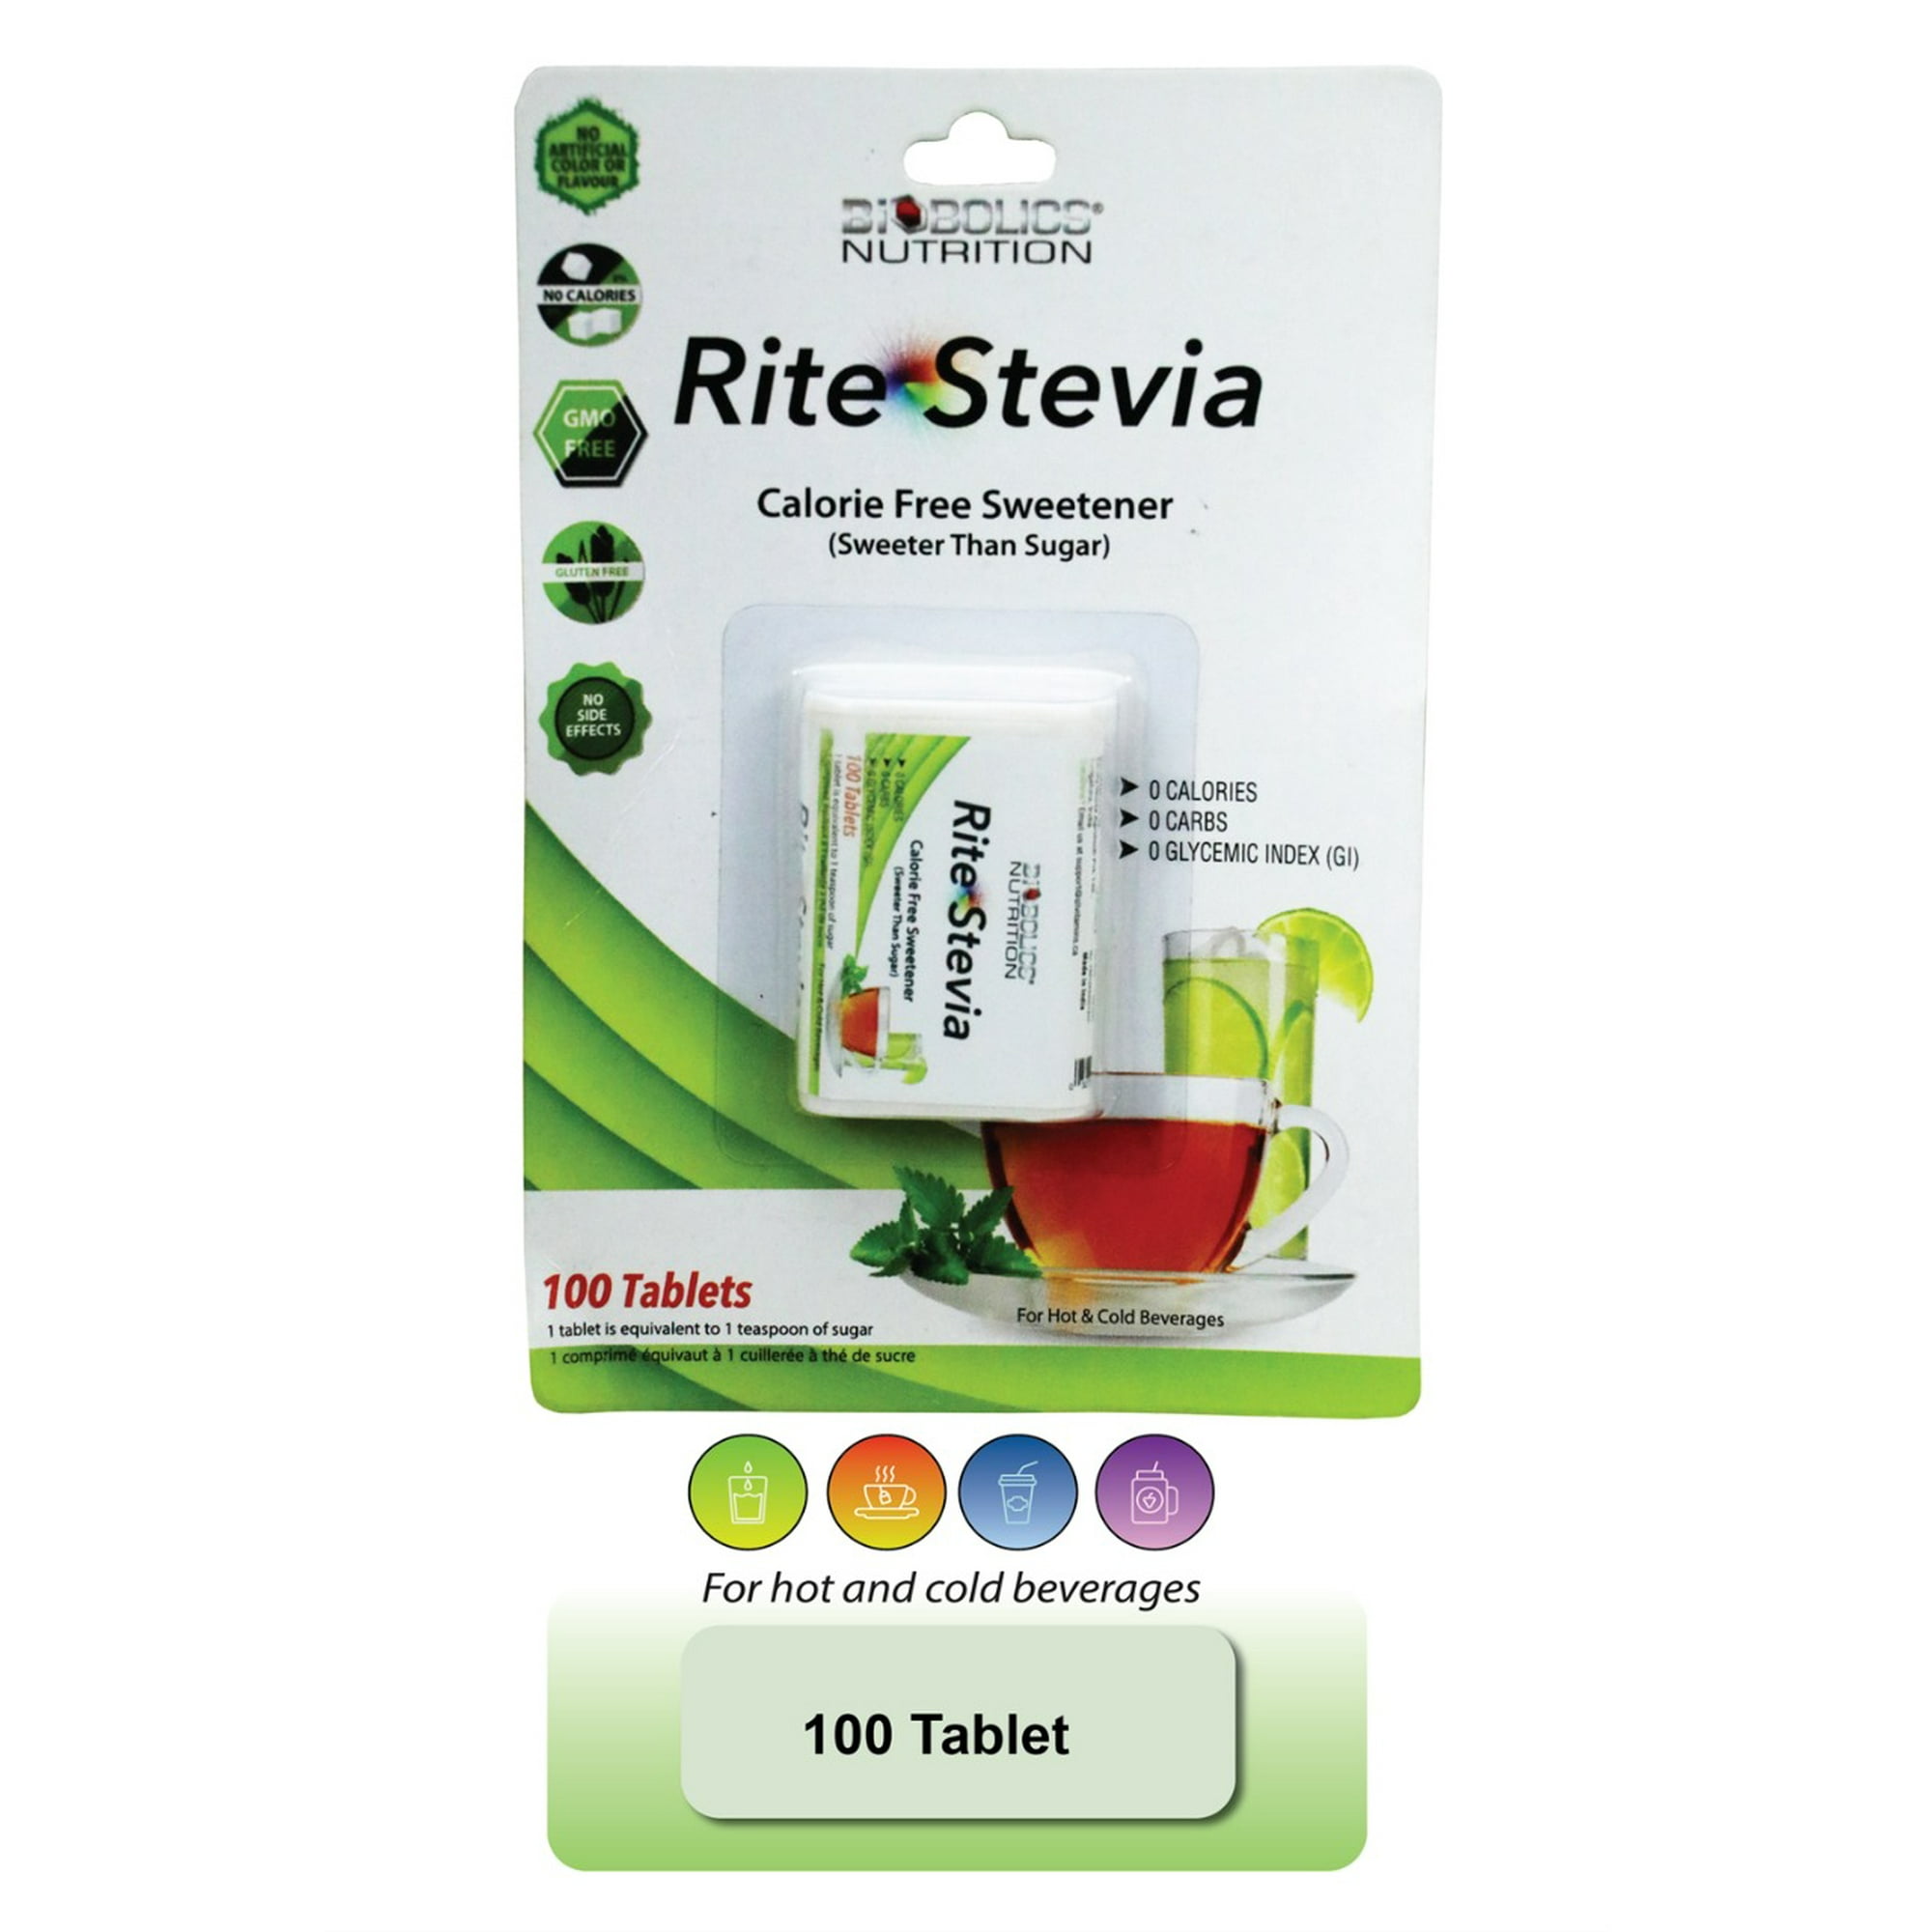 Stevia vs sugar